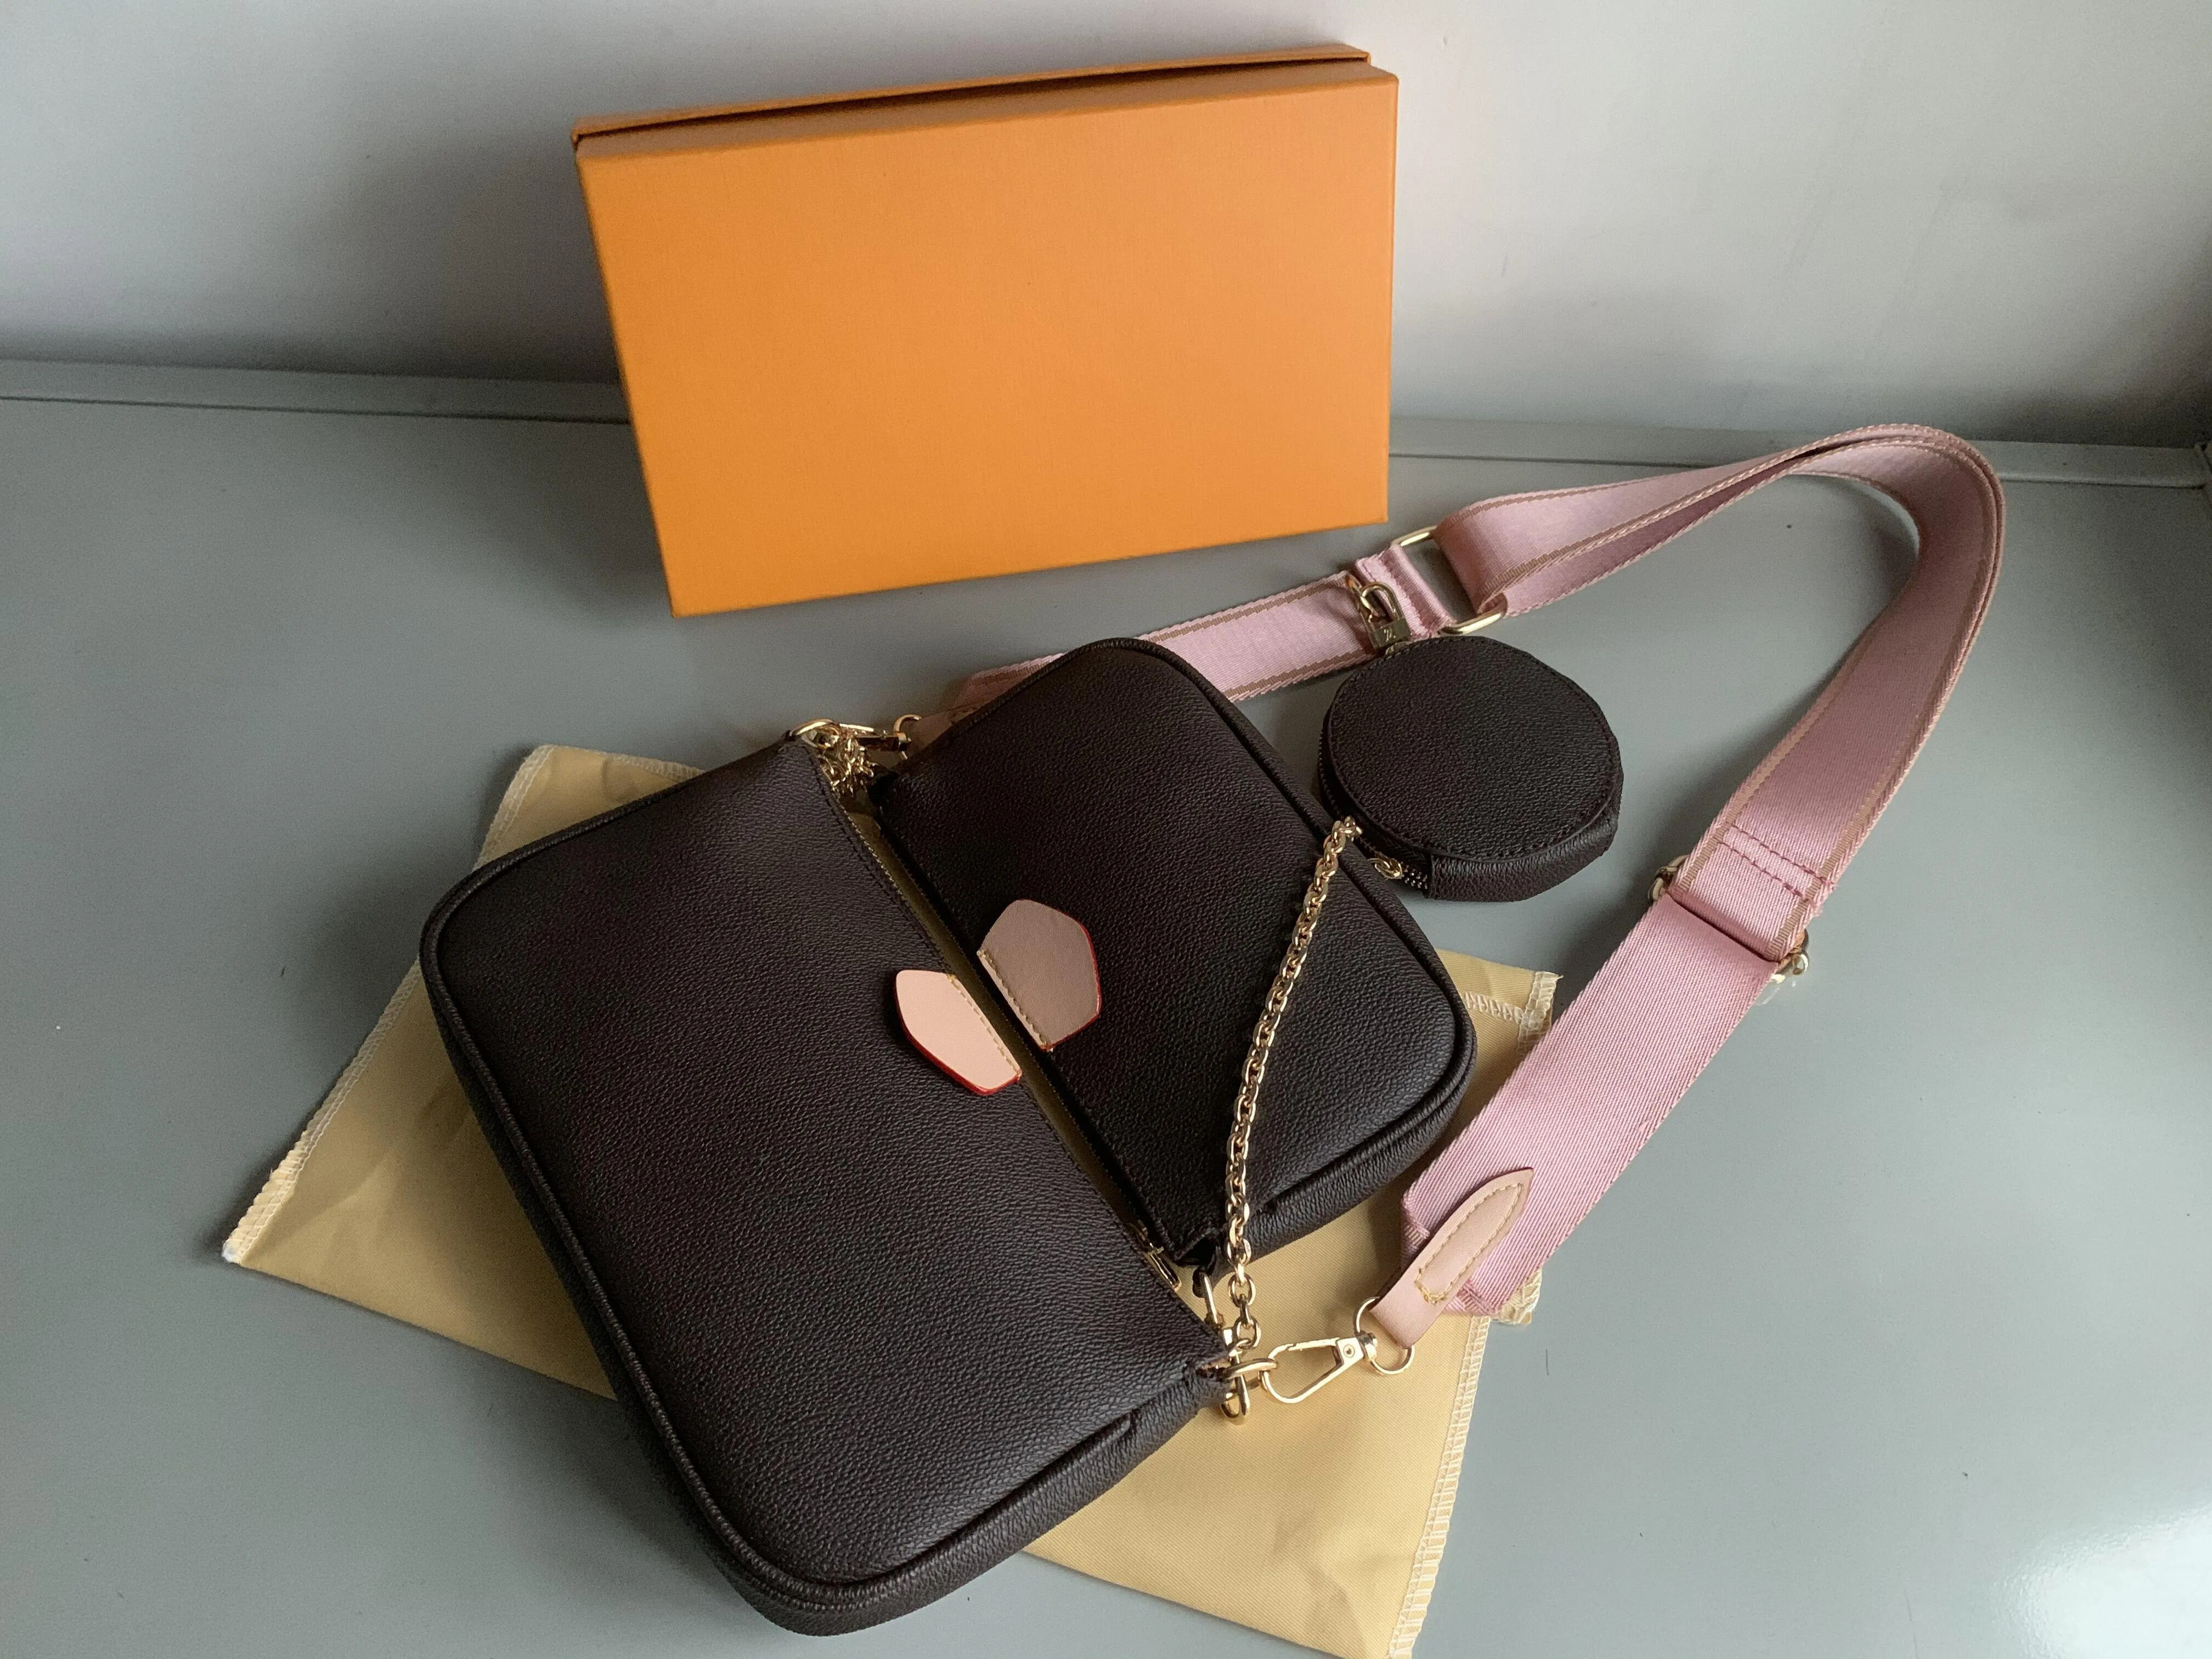 Buy JG Shoppe PU Leather Handbag| Handbag for women Latest brand | Stylish  Ladies Bag | Handheld Bag - White and Red at Amazon.in